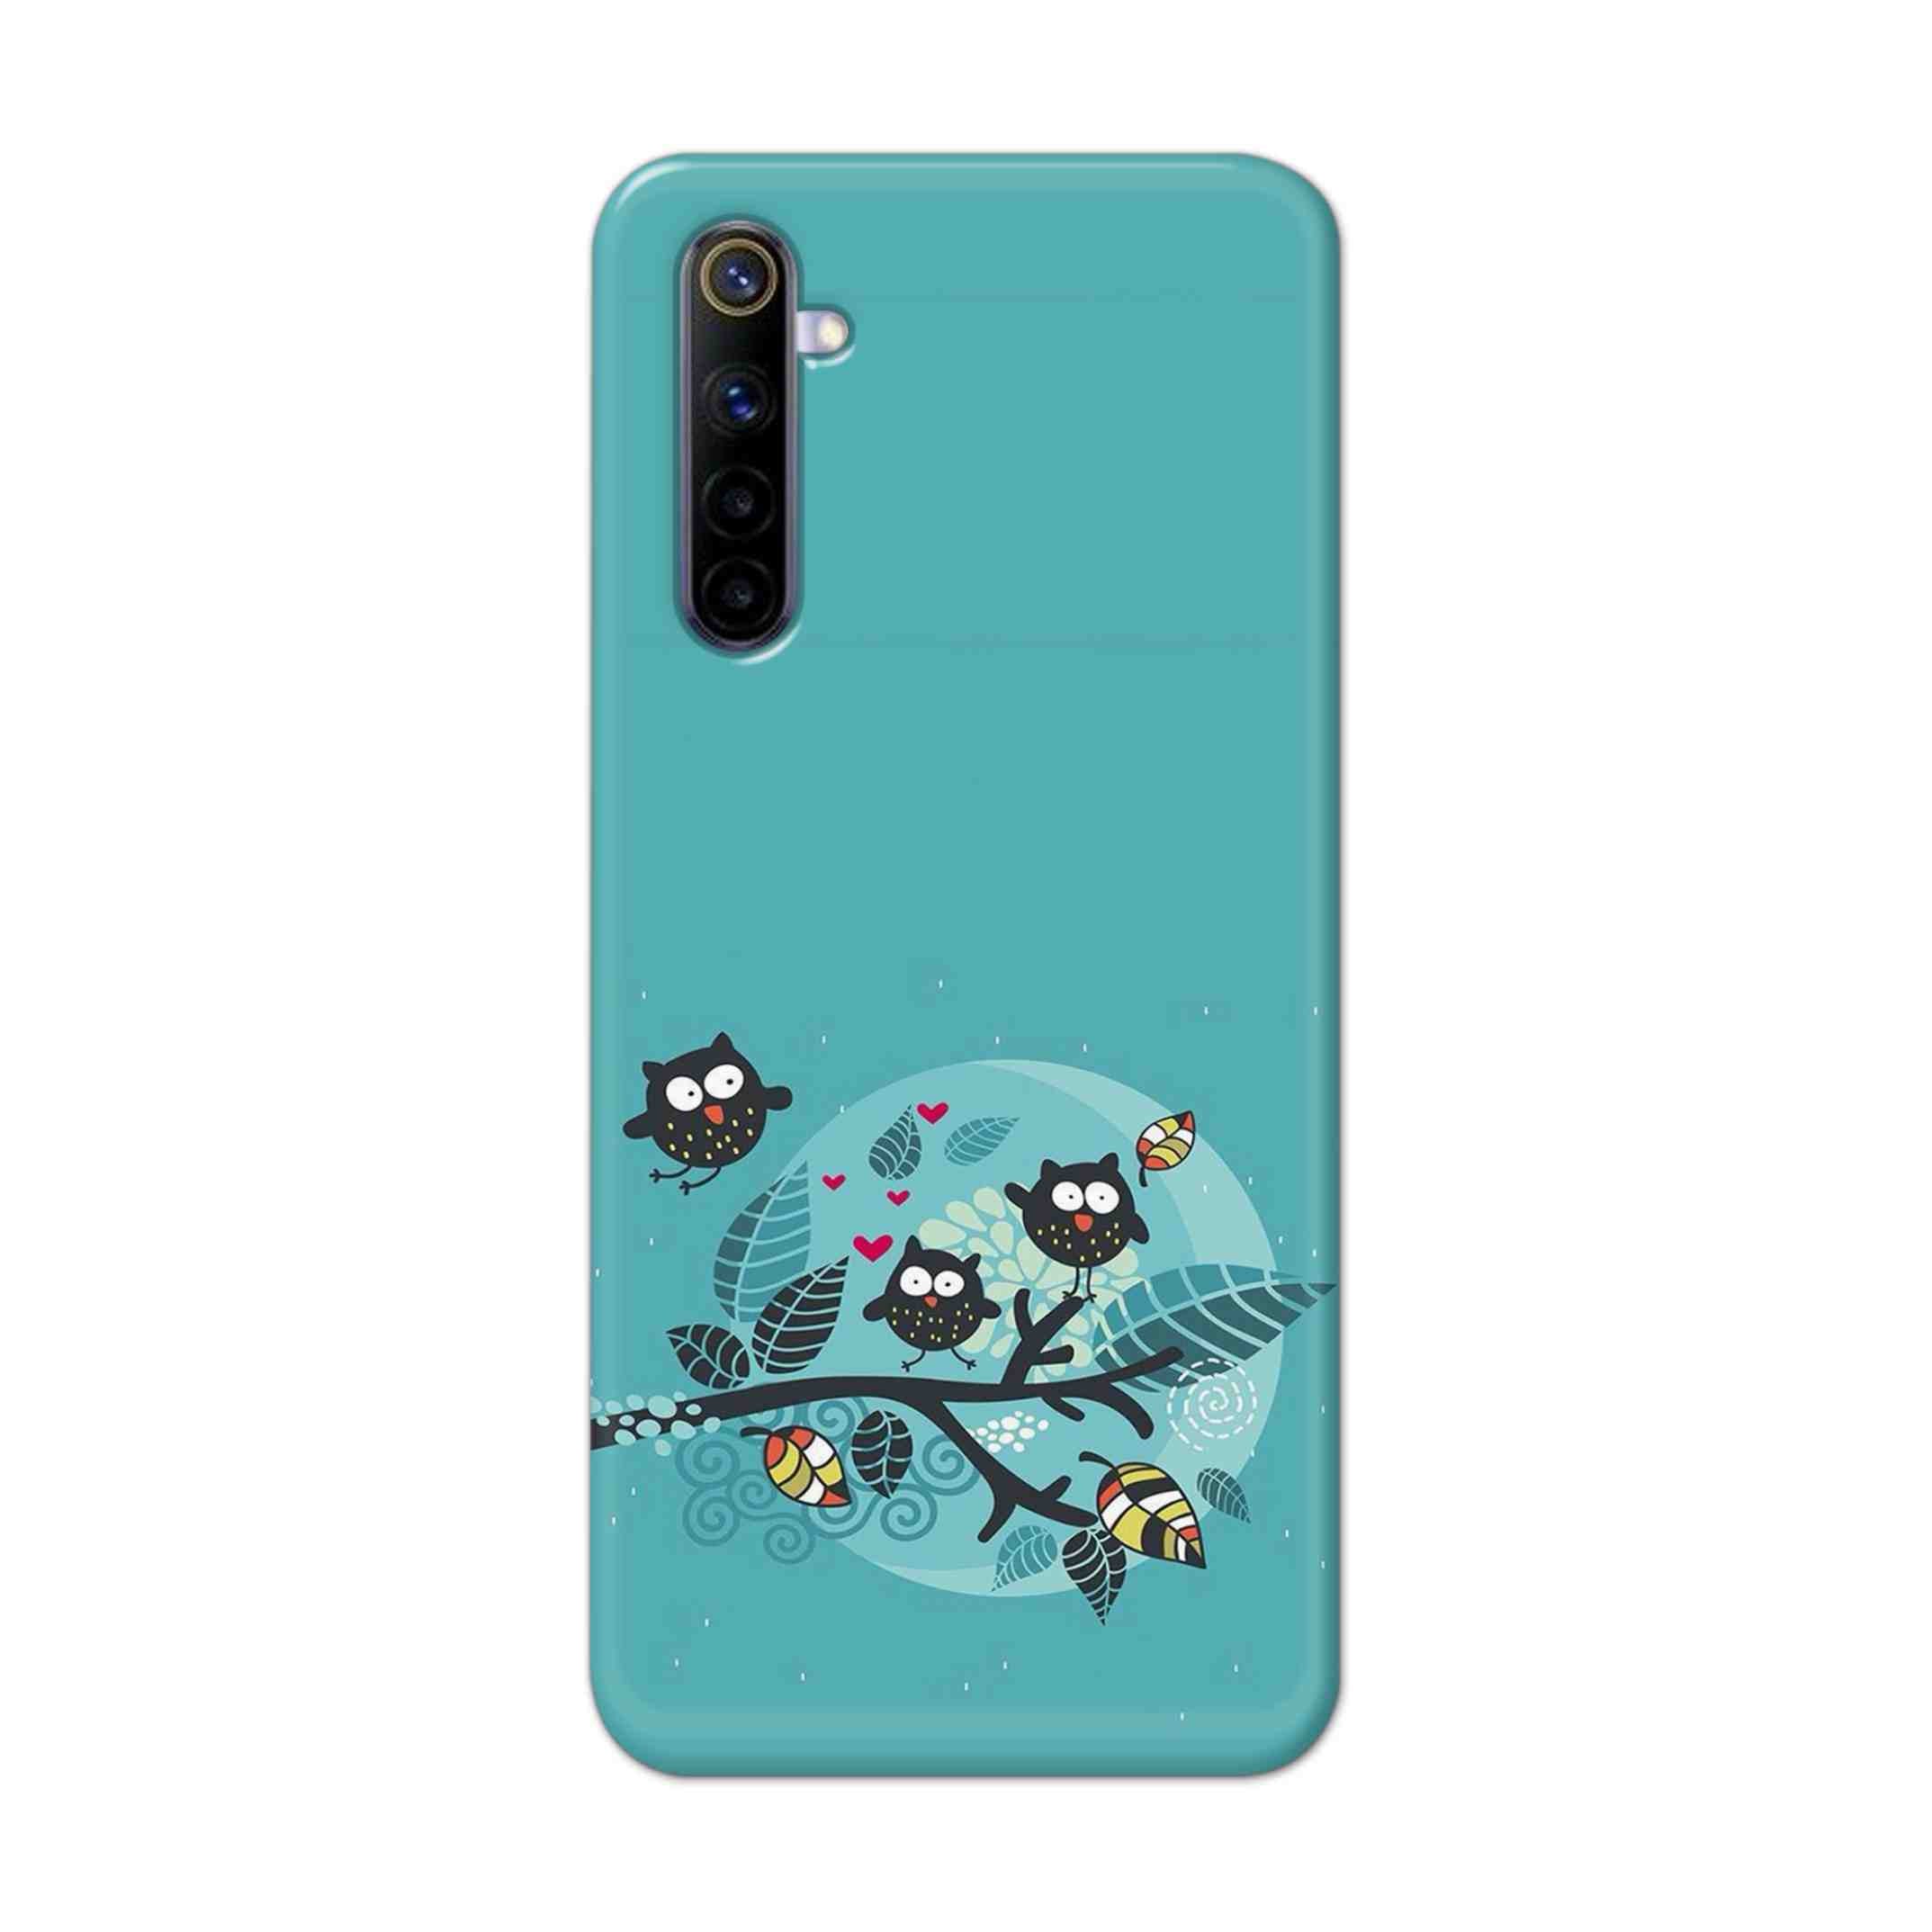 Buy Owl Hard Back Mobile Phone Case Cover For REALME 6 PRO Online